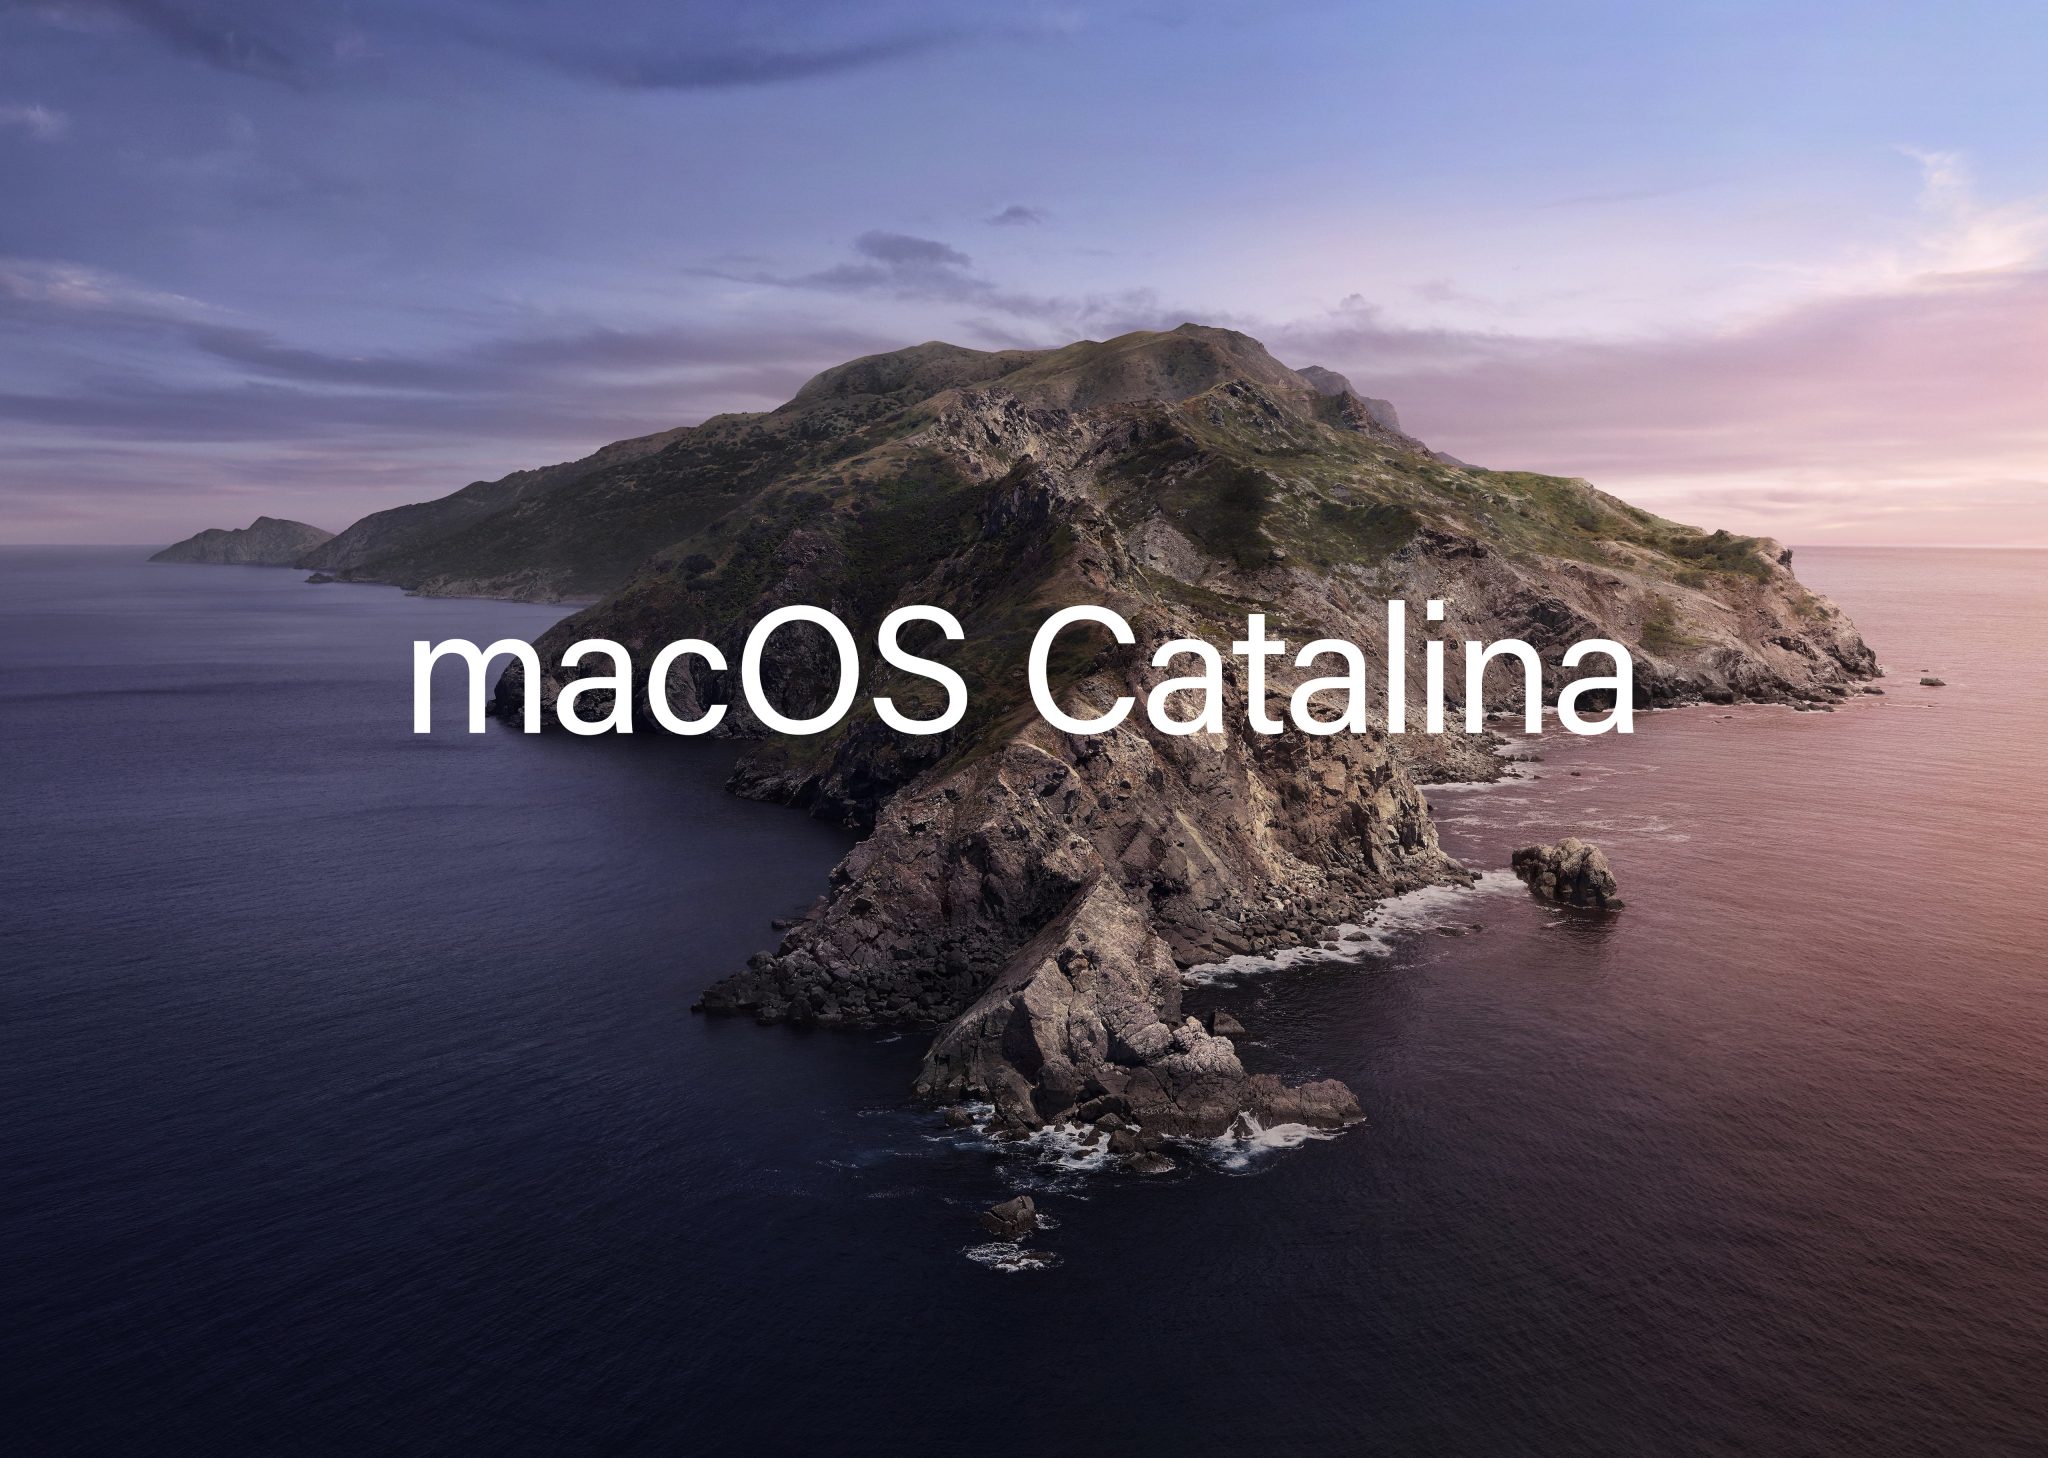 Mac os catalina for virtualbox 2019 pc